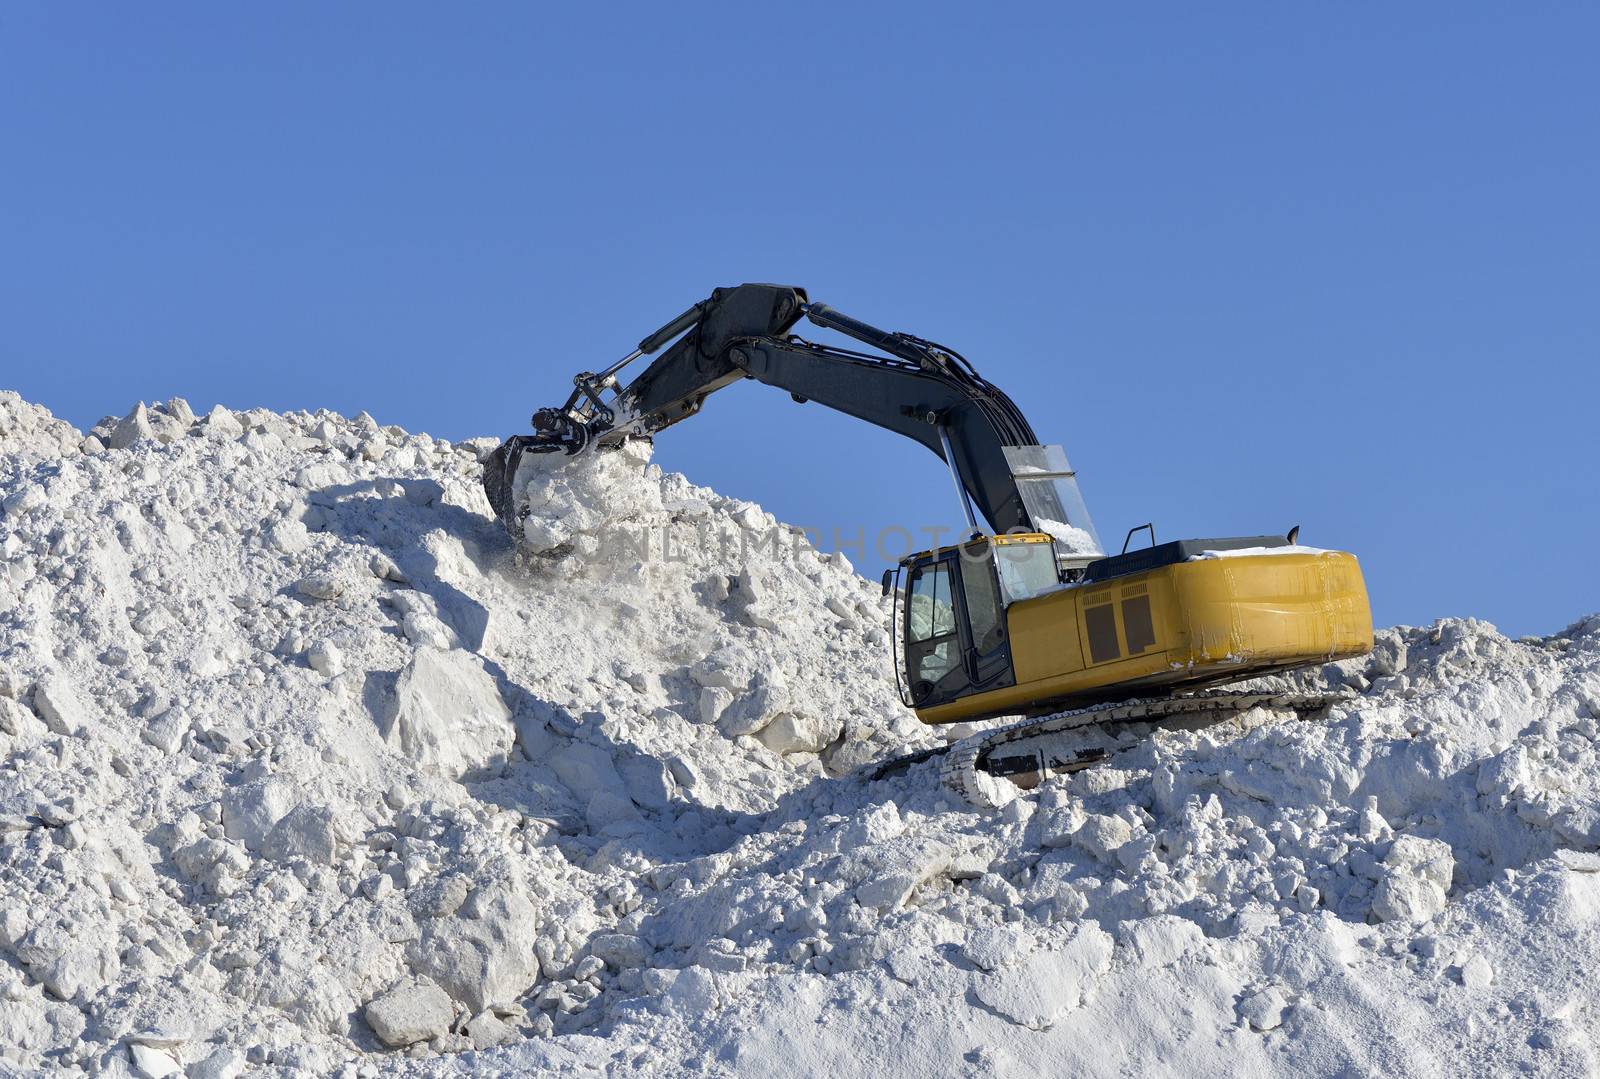 Stacking snow excavator by Hbak